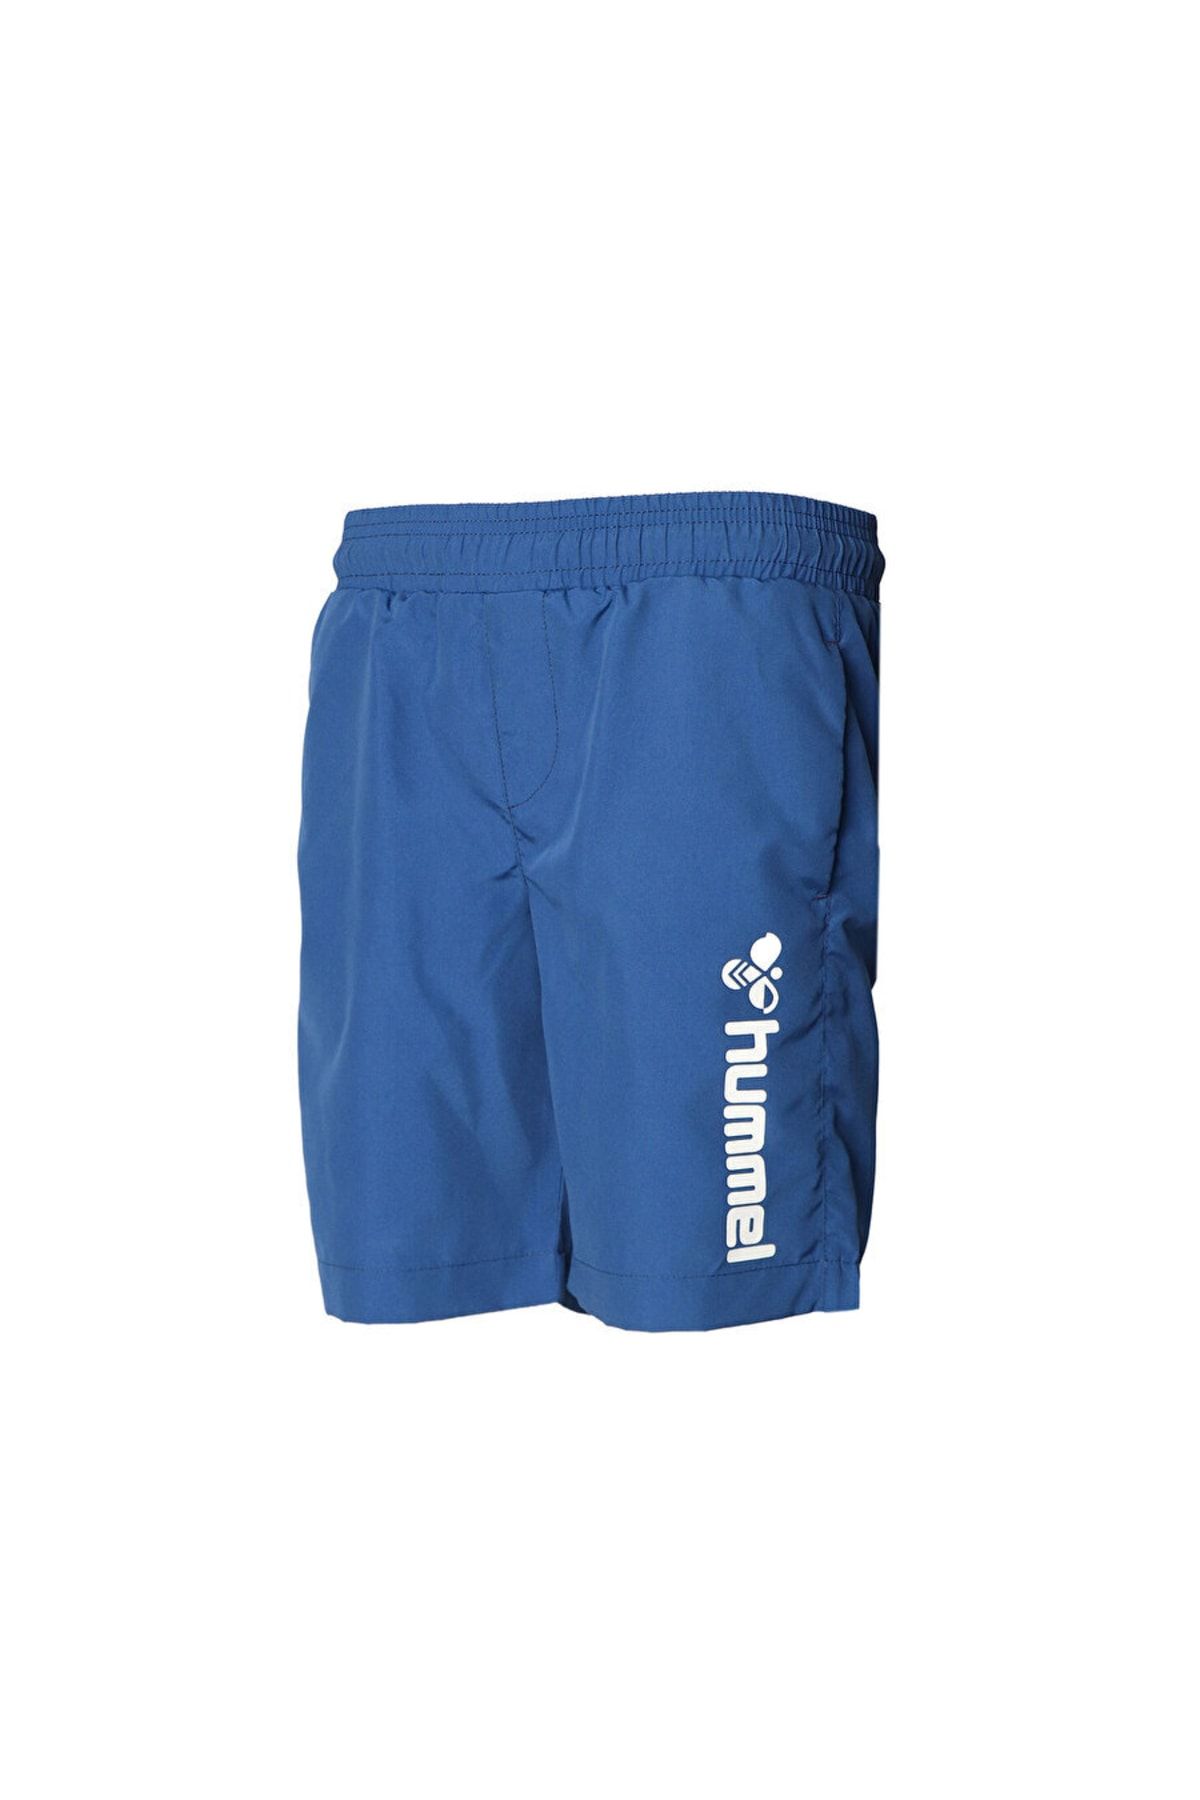 hummel Hmlbonx Swim Shorts